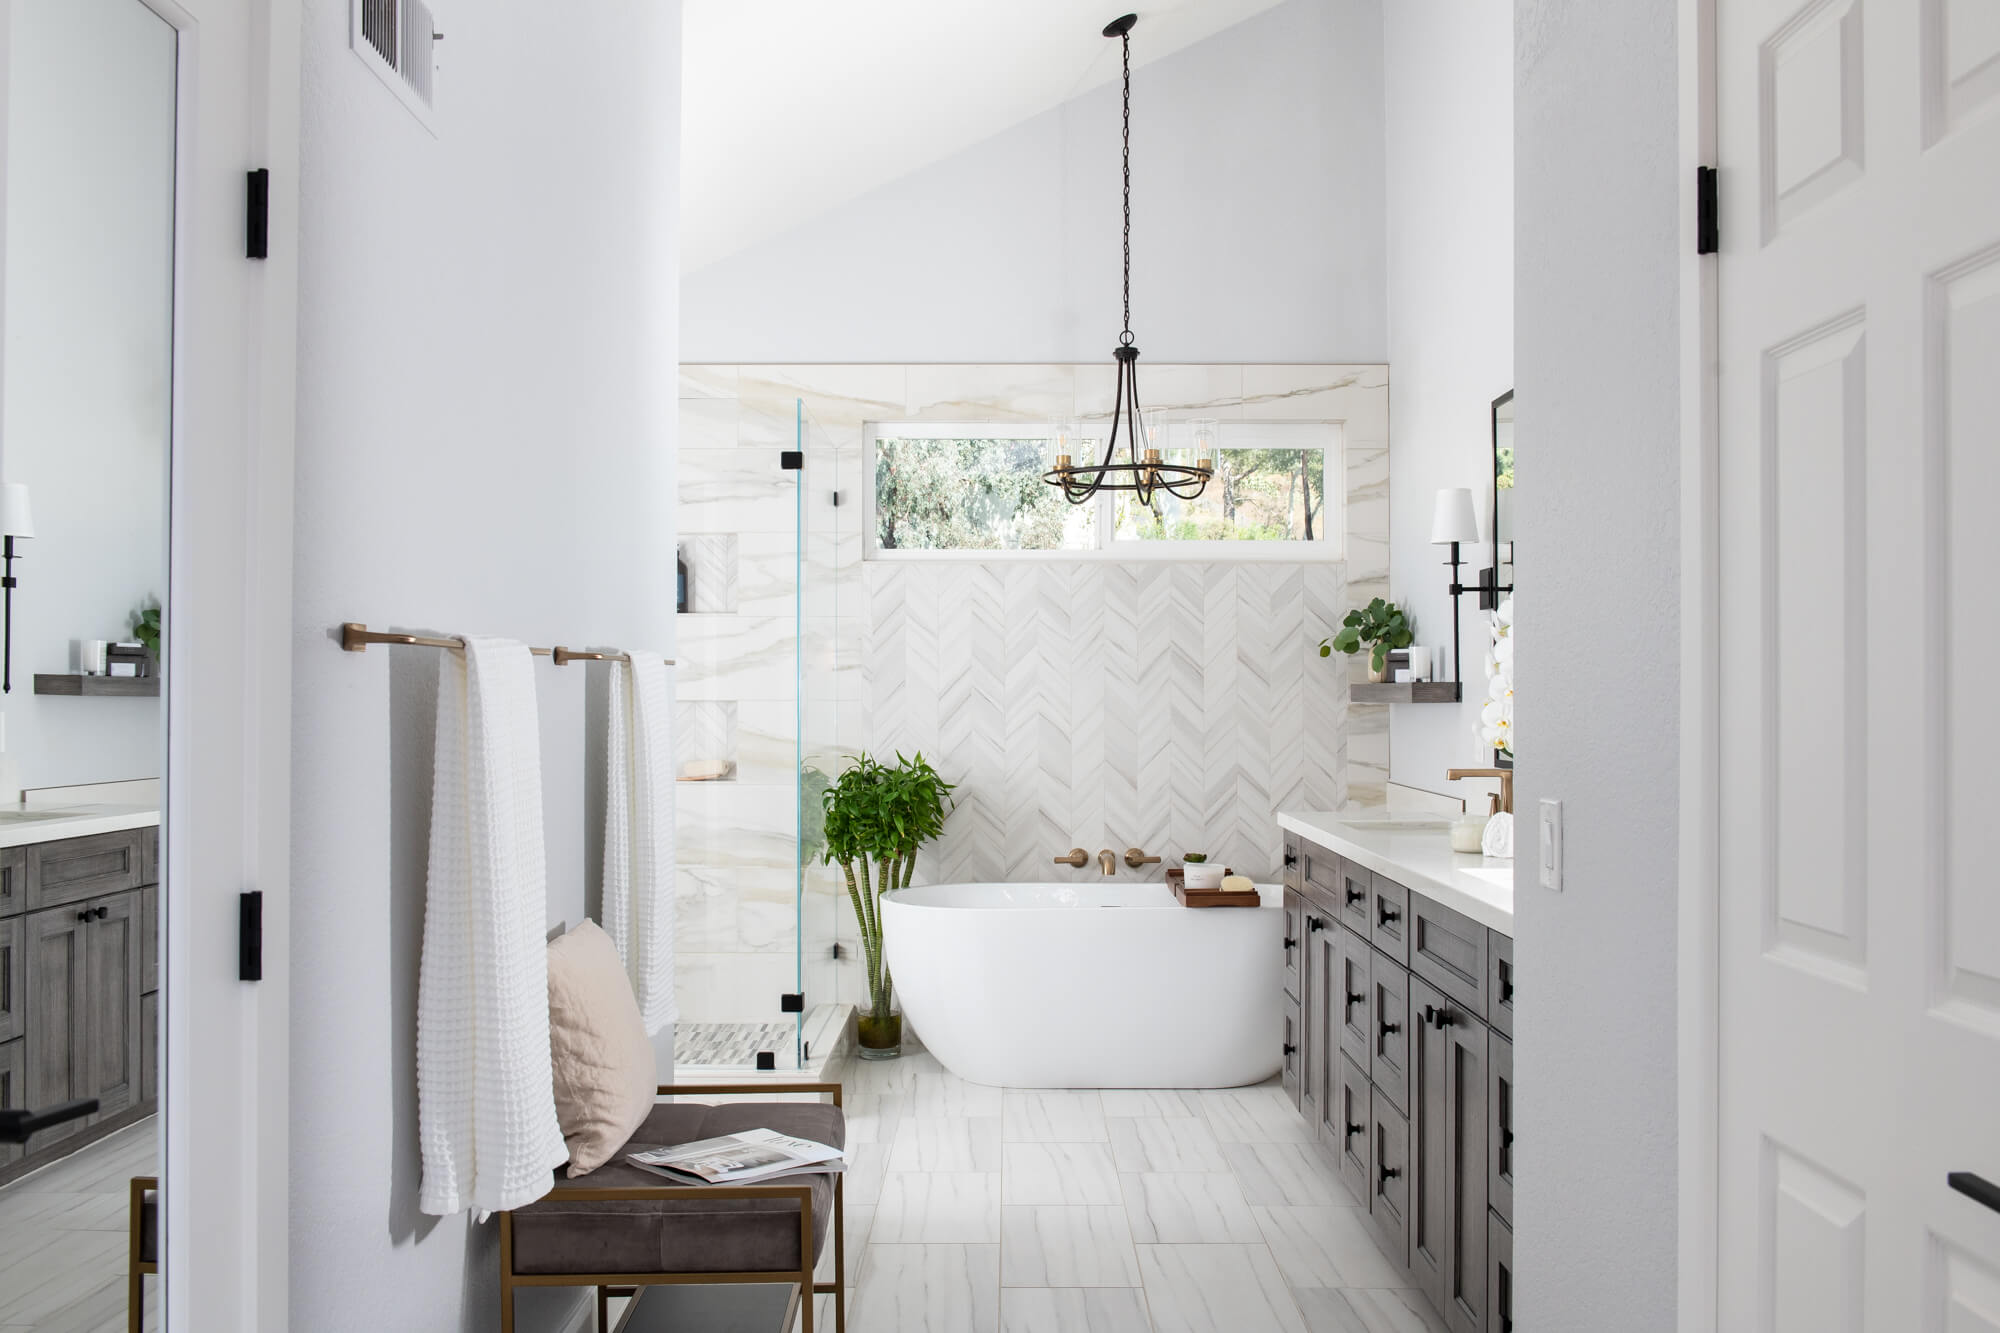 Home Design & Construction Company Orange County - Bathroom & Kitchen ...